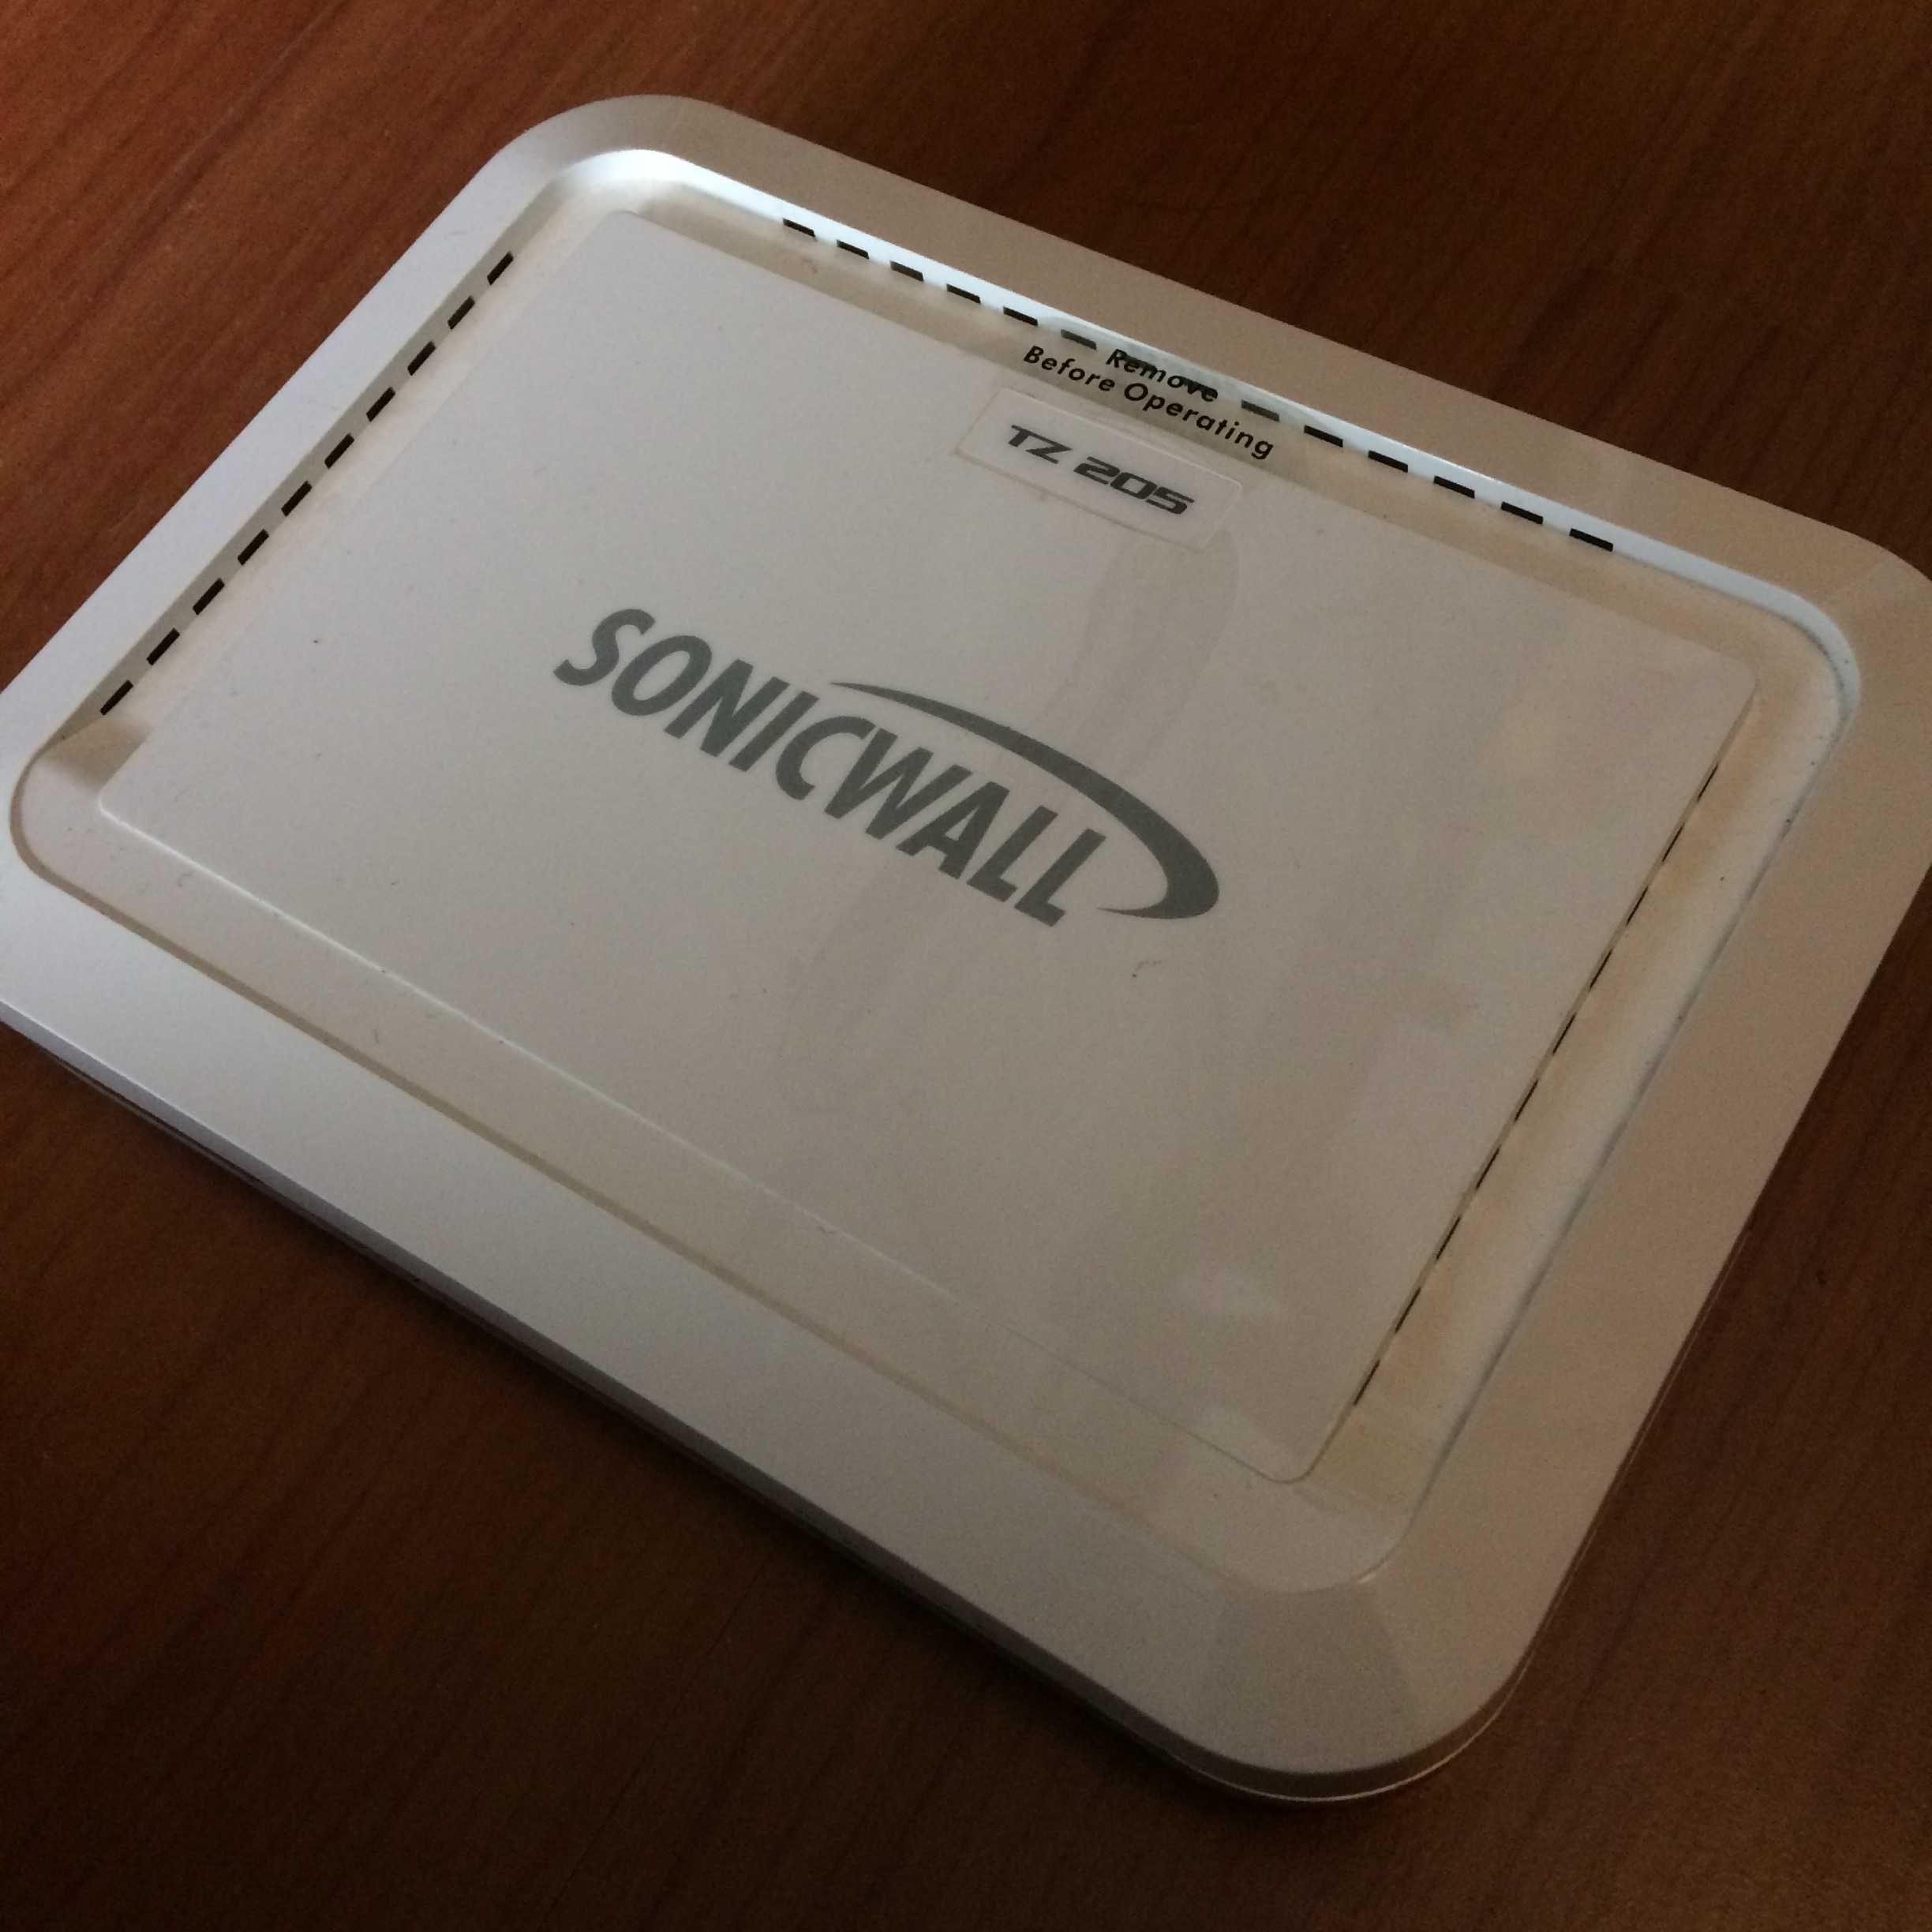 Sonicwall TZ 205 firewall